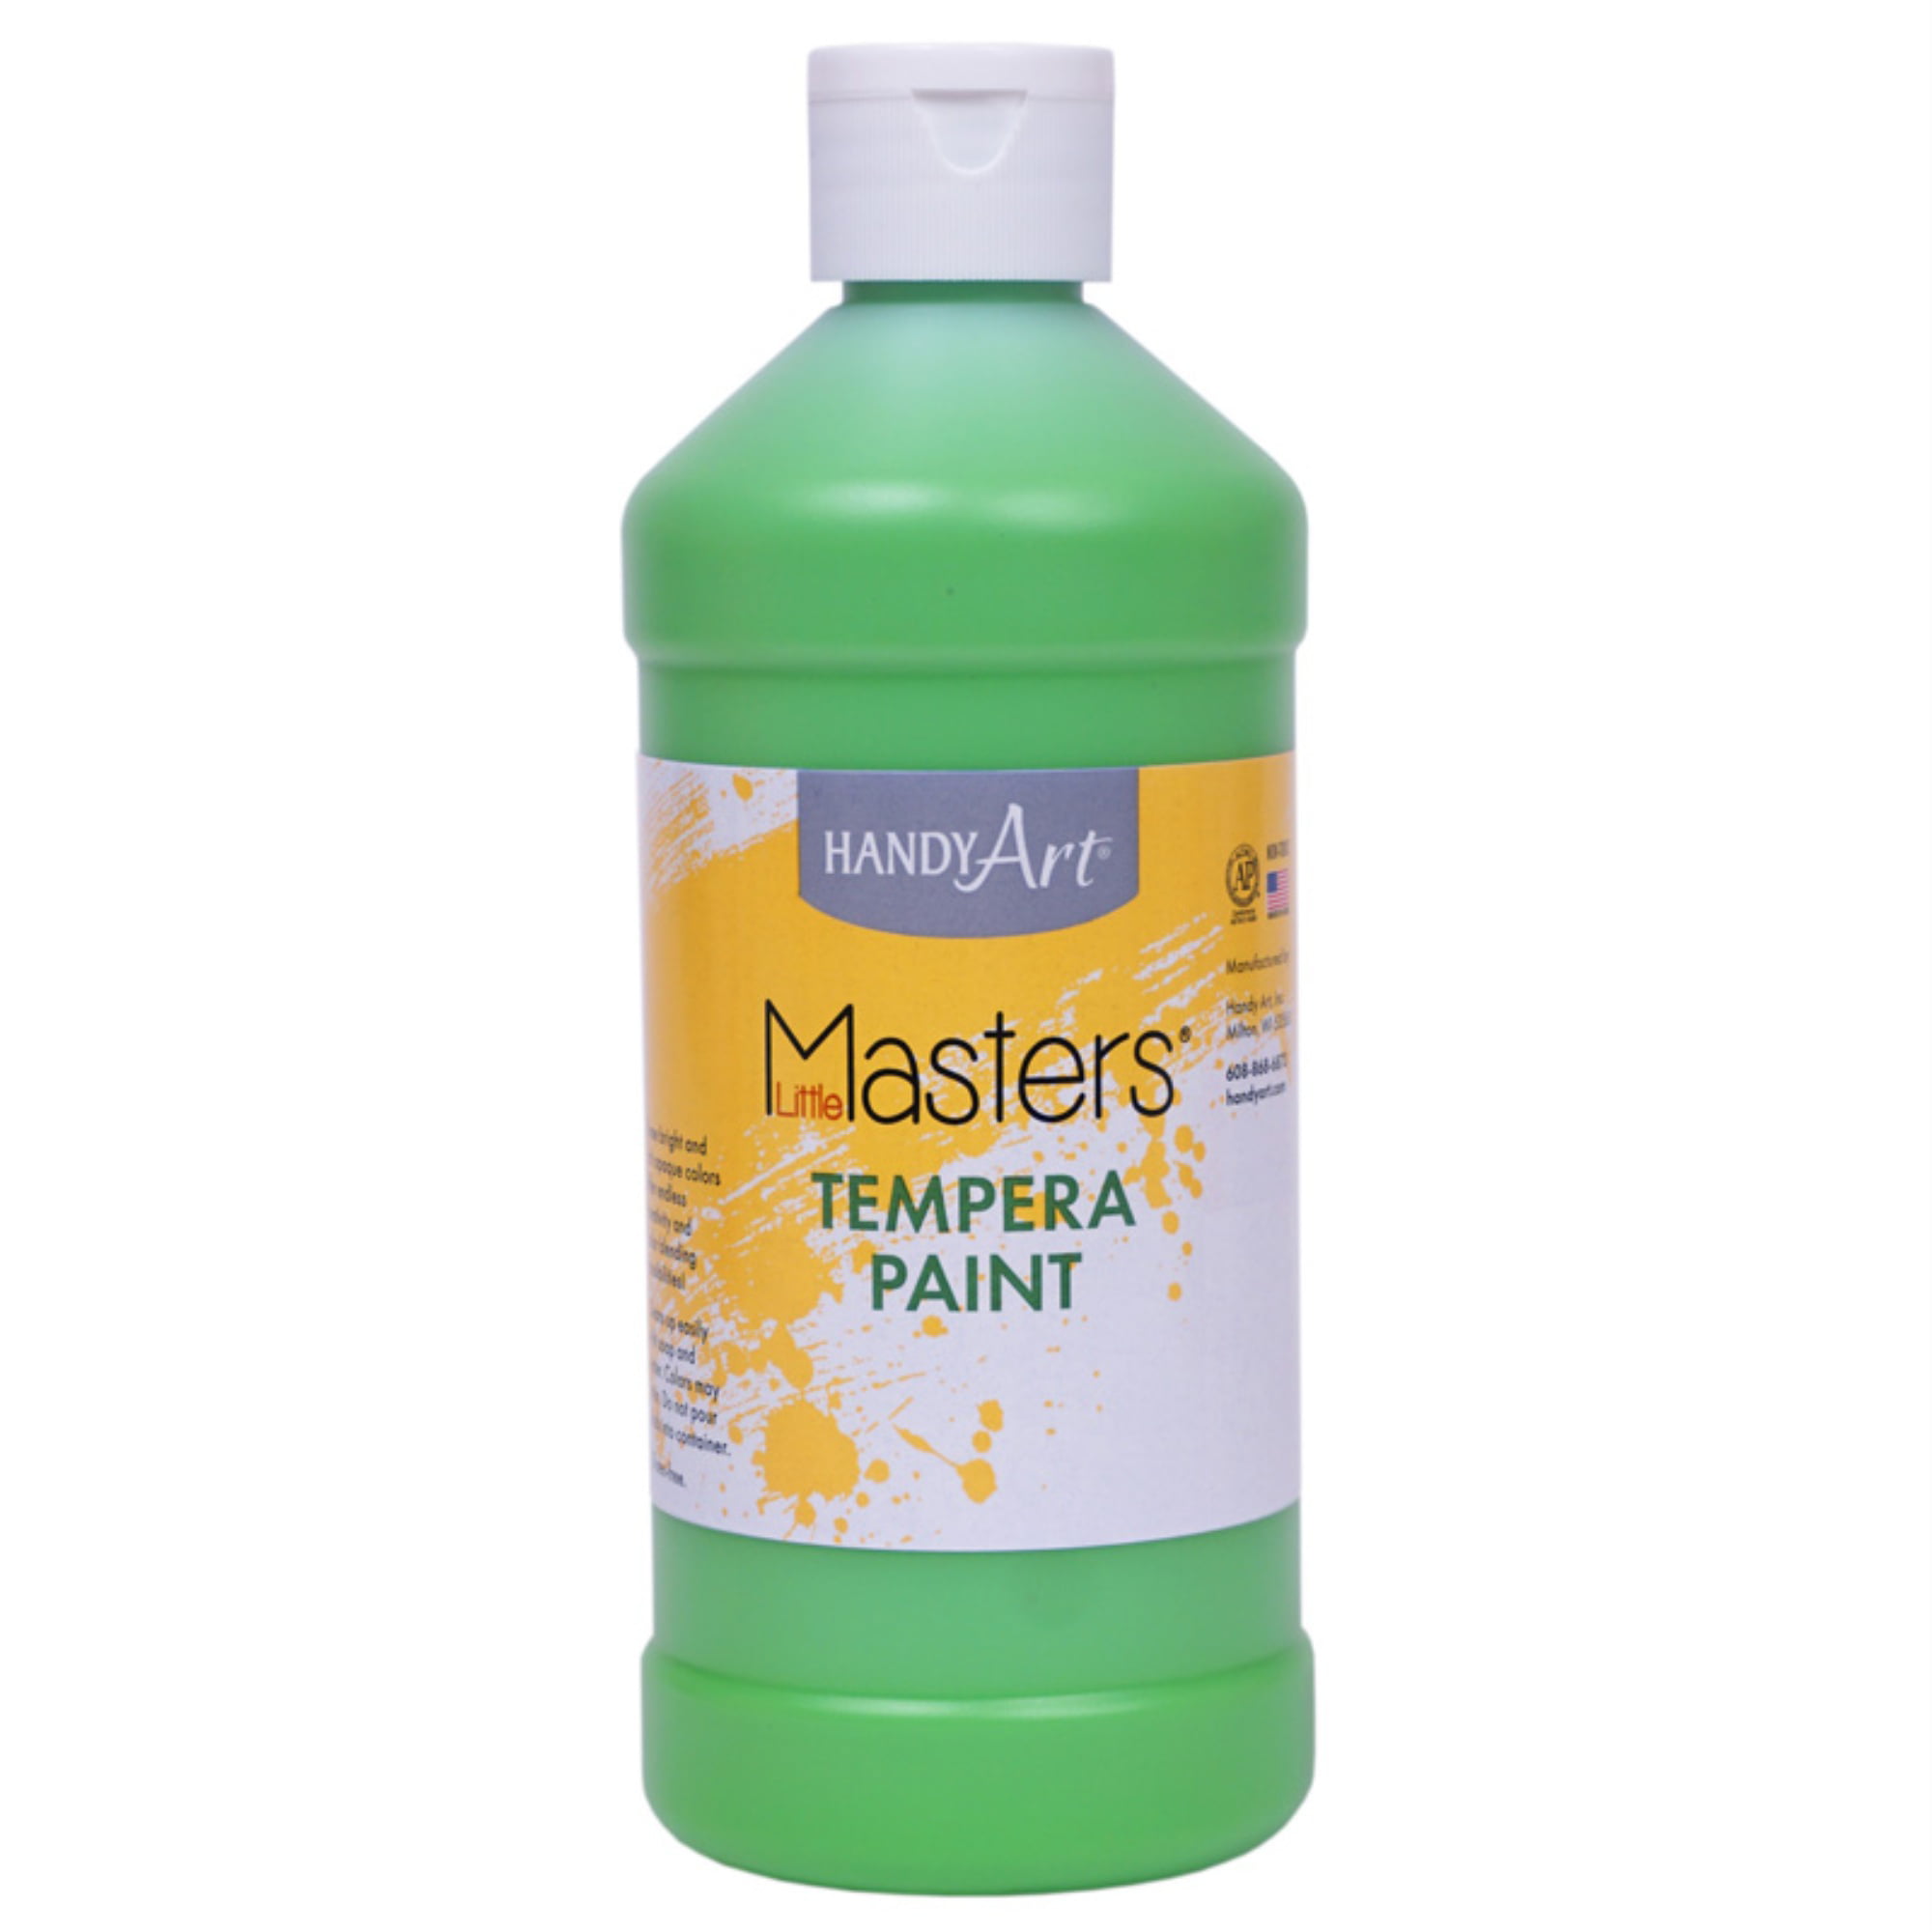 Little Masters Tempera Paint, Light Green, 16 oz. | Bundle of 5 -New